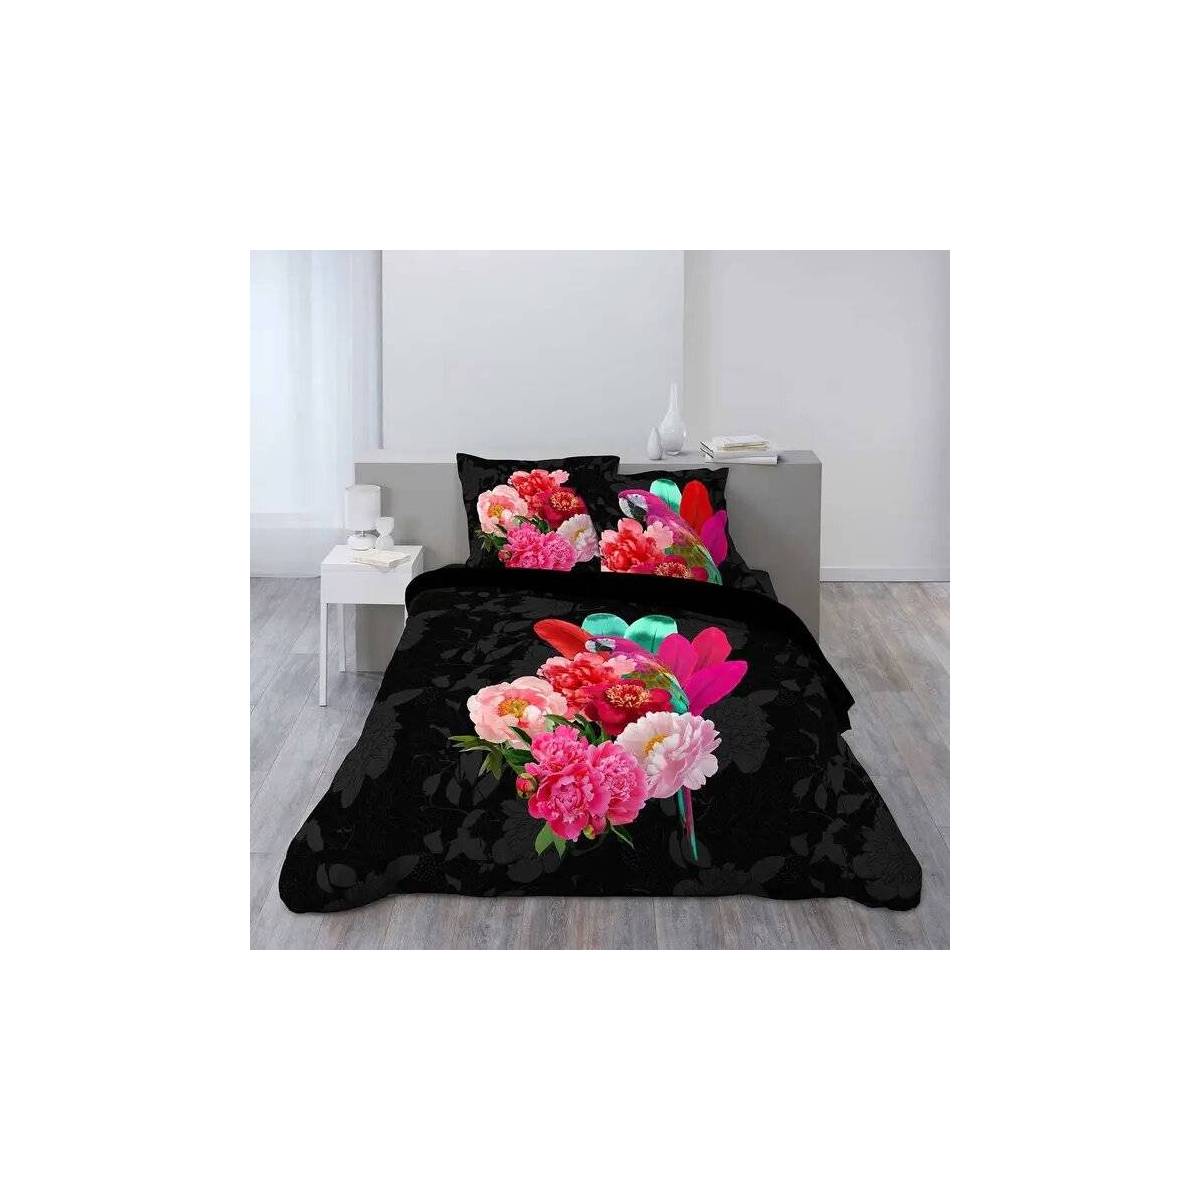 Duvet cover Flowers & Parrot Perropink 200 x 200 cm black